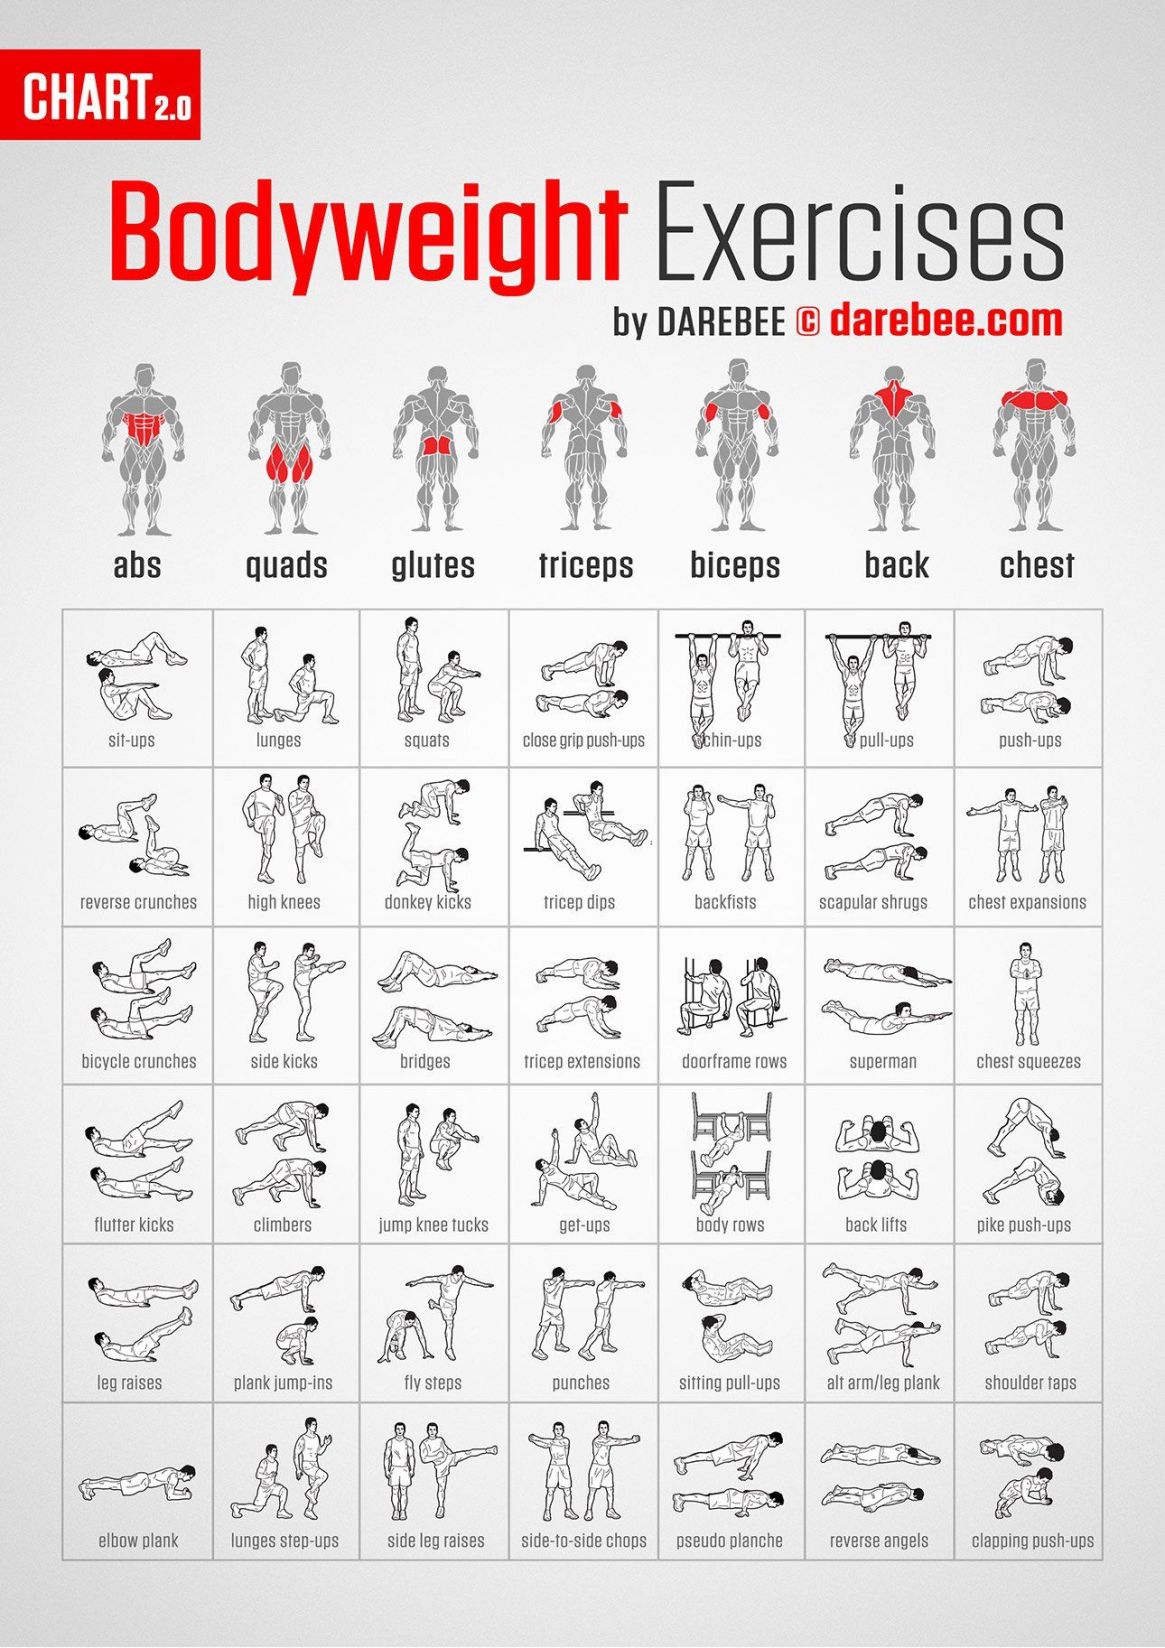 Bodyweight Exercises by Darebee